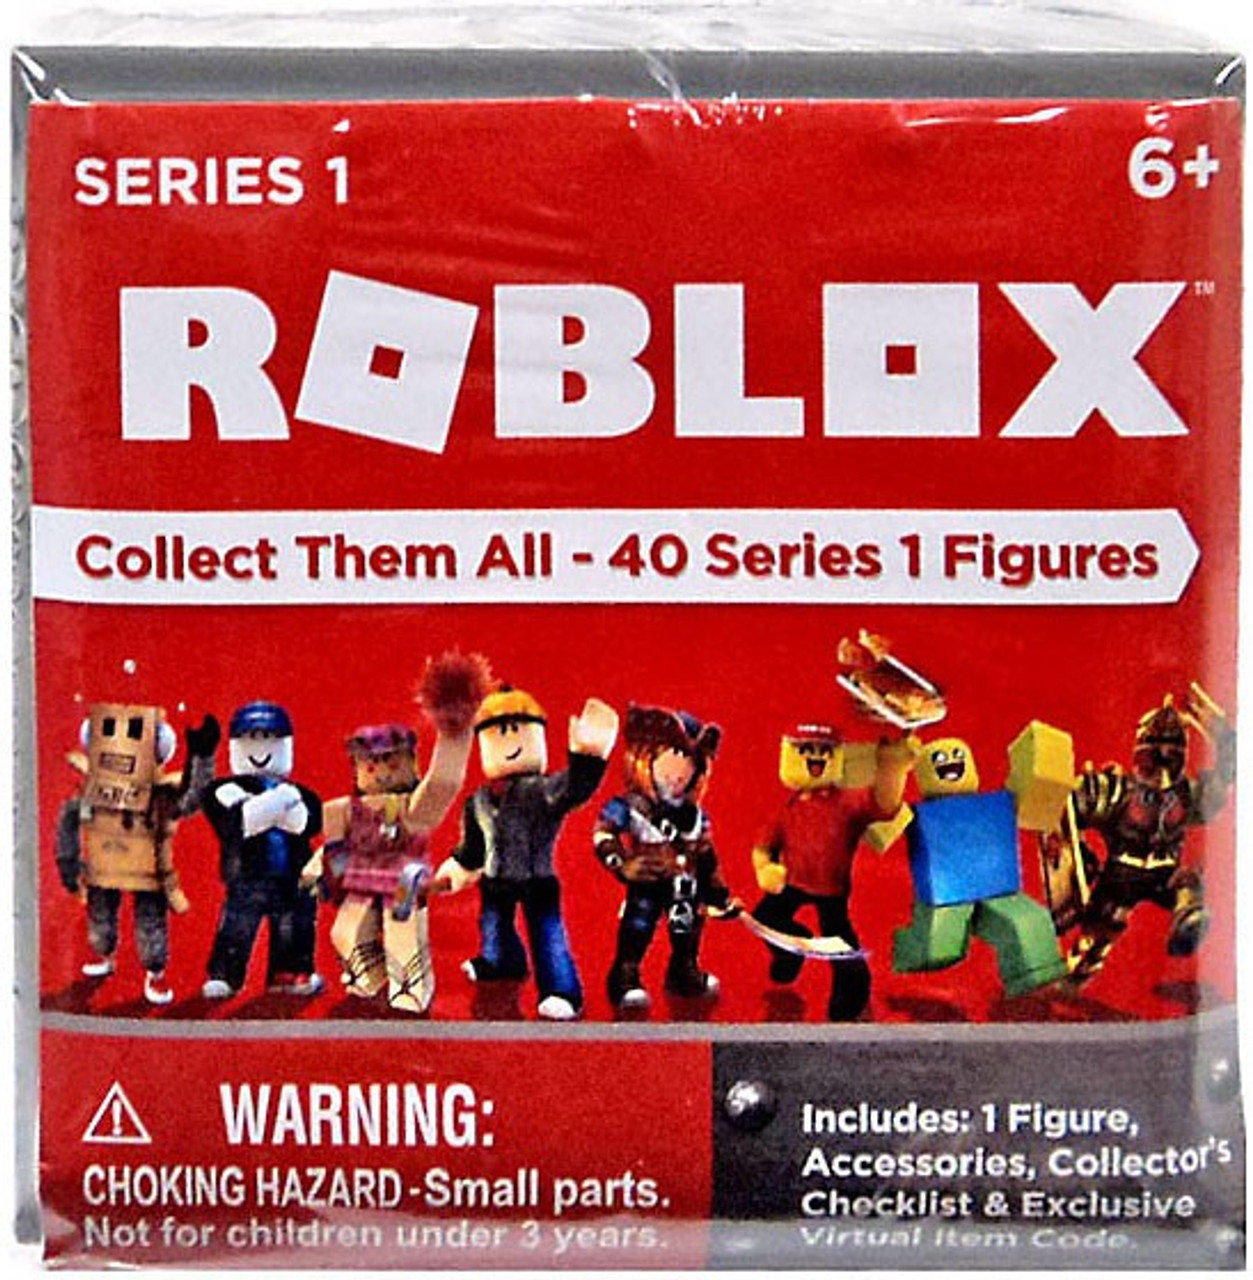 Vnvy0zlzfe0gpm - roblox series 2 random mystery box figures kutija iznenađenja